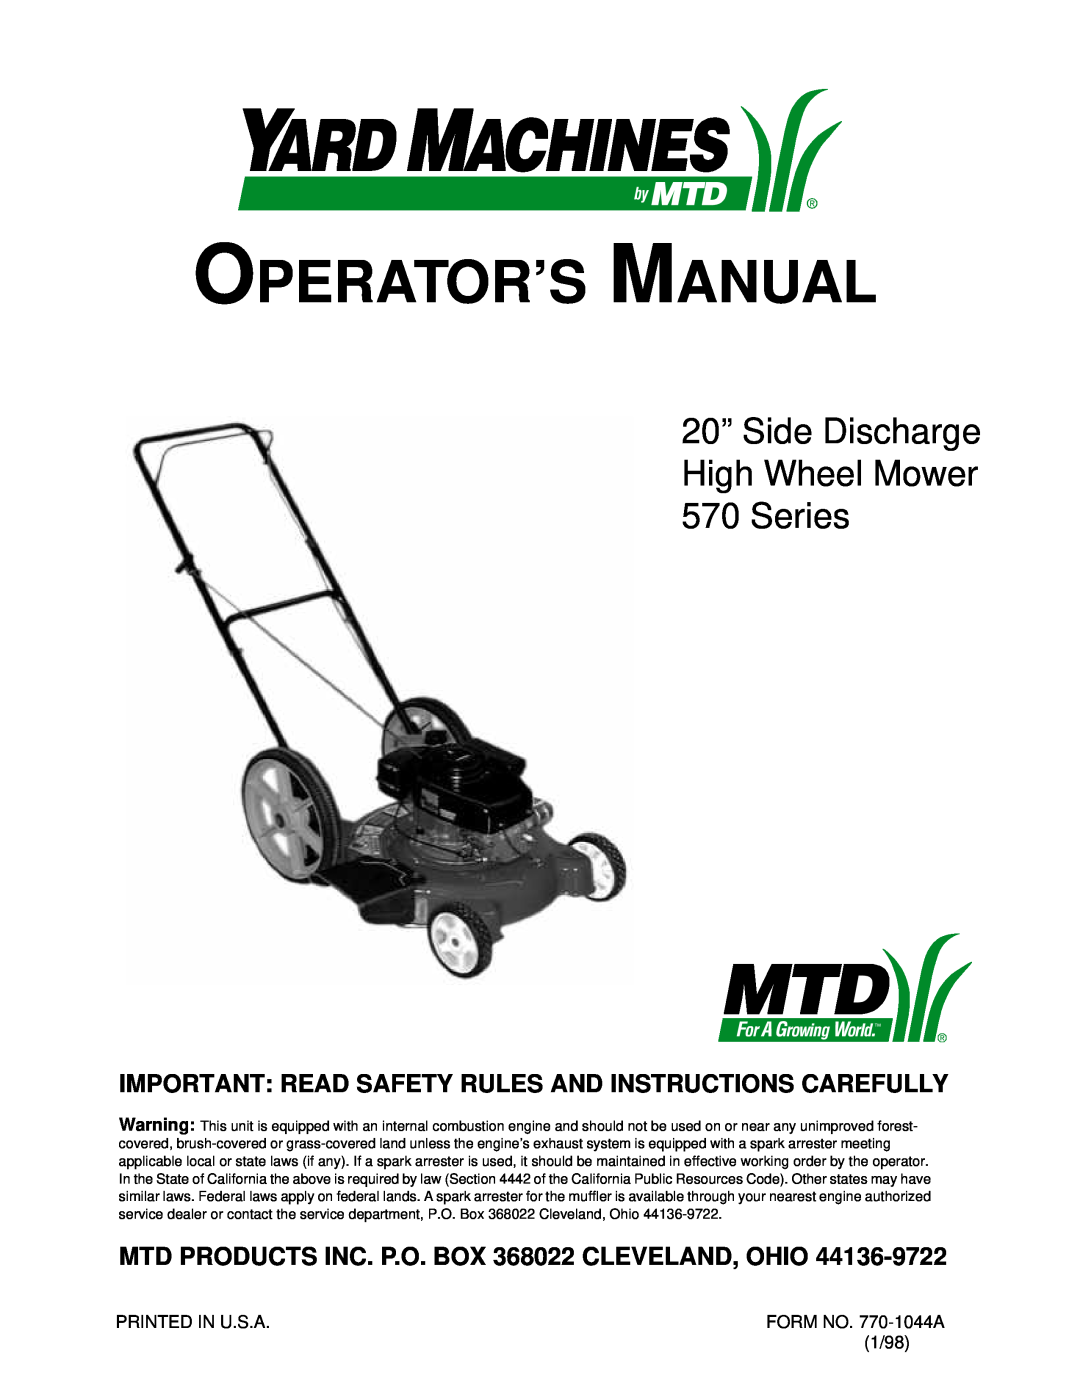 Yard Machines manual Operator’S Manual, 20” Side Discharge High Wheel Mower 570 Series 